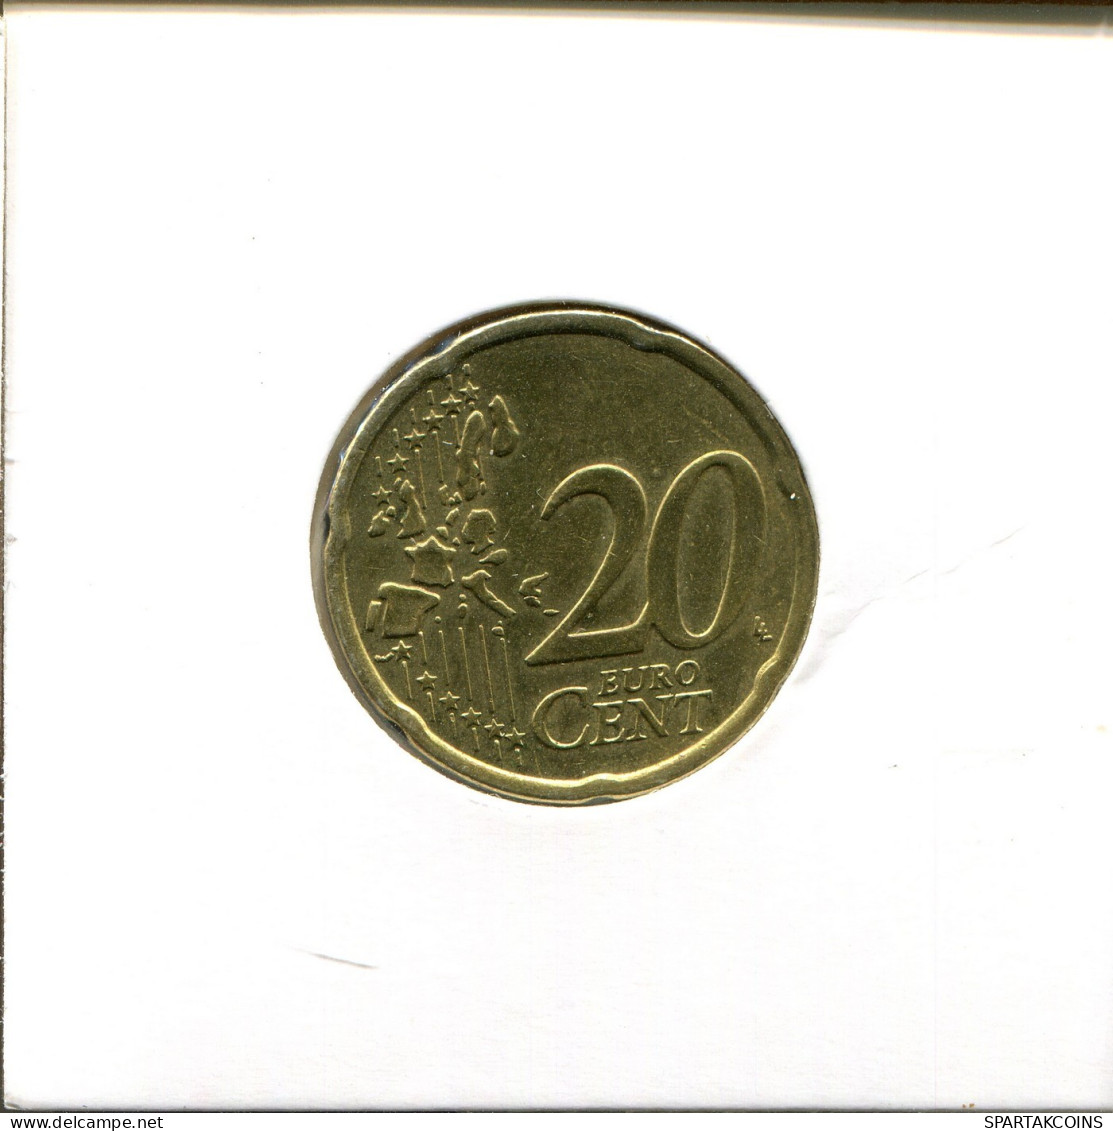 20 EURO CENTS 2001 FINLAND Coin #EU086.U.A - Finnland